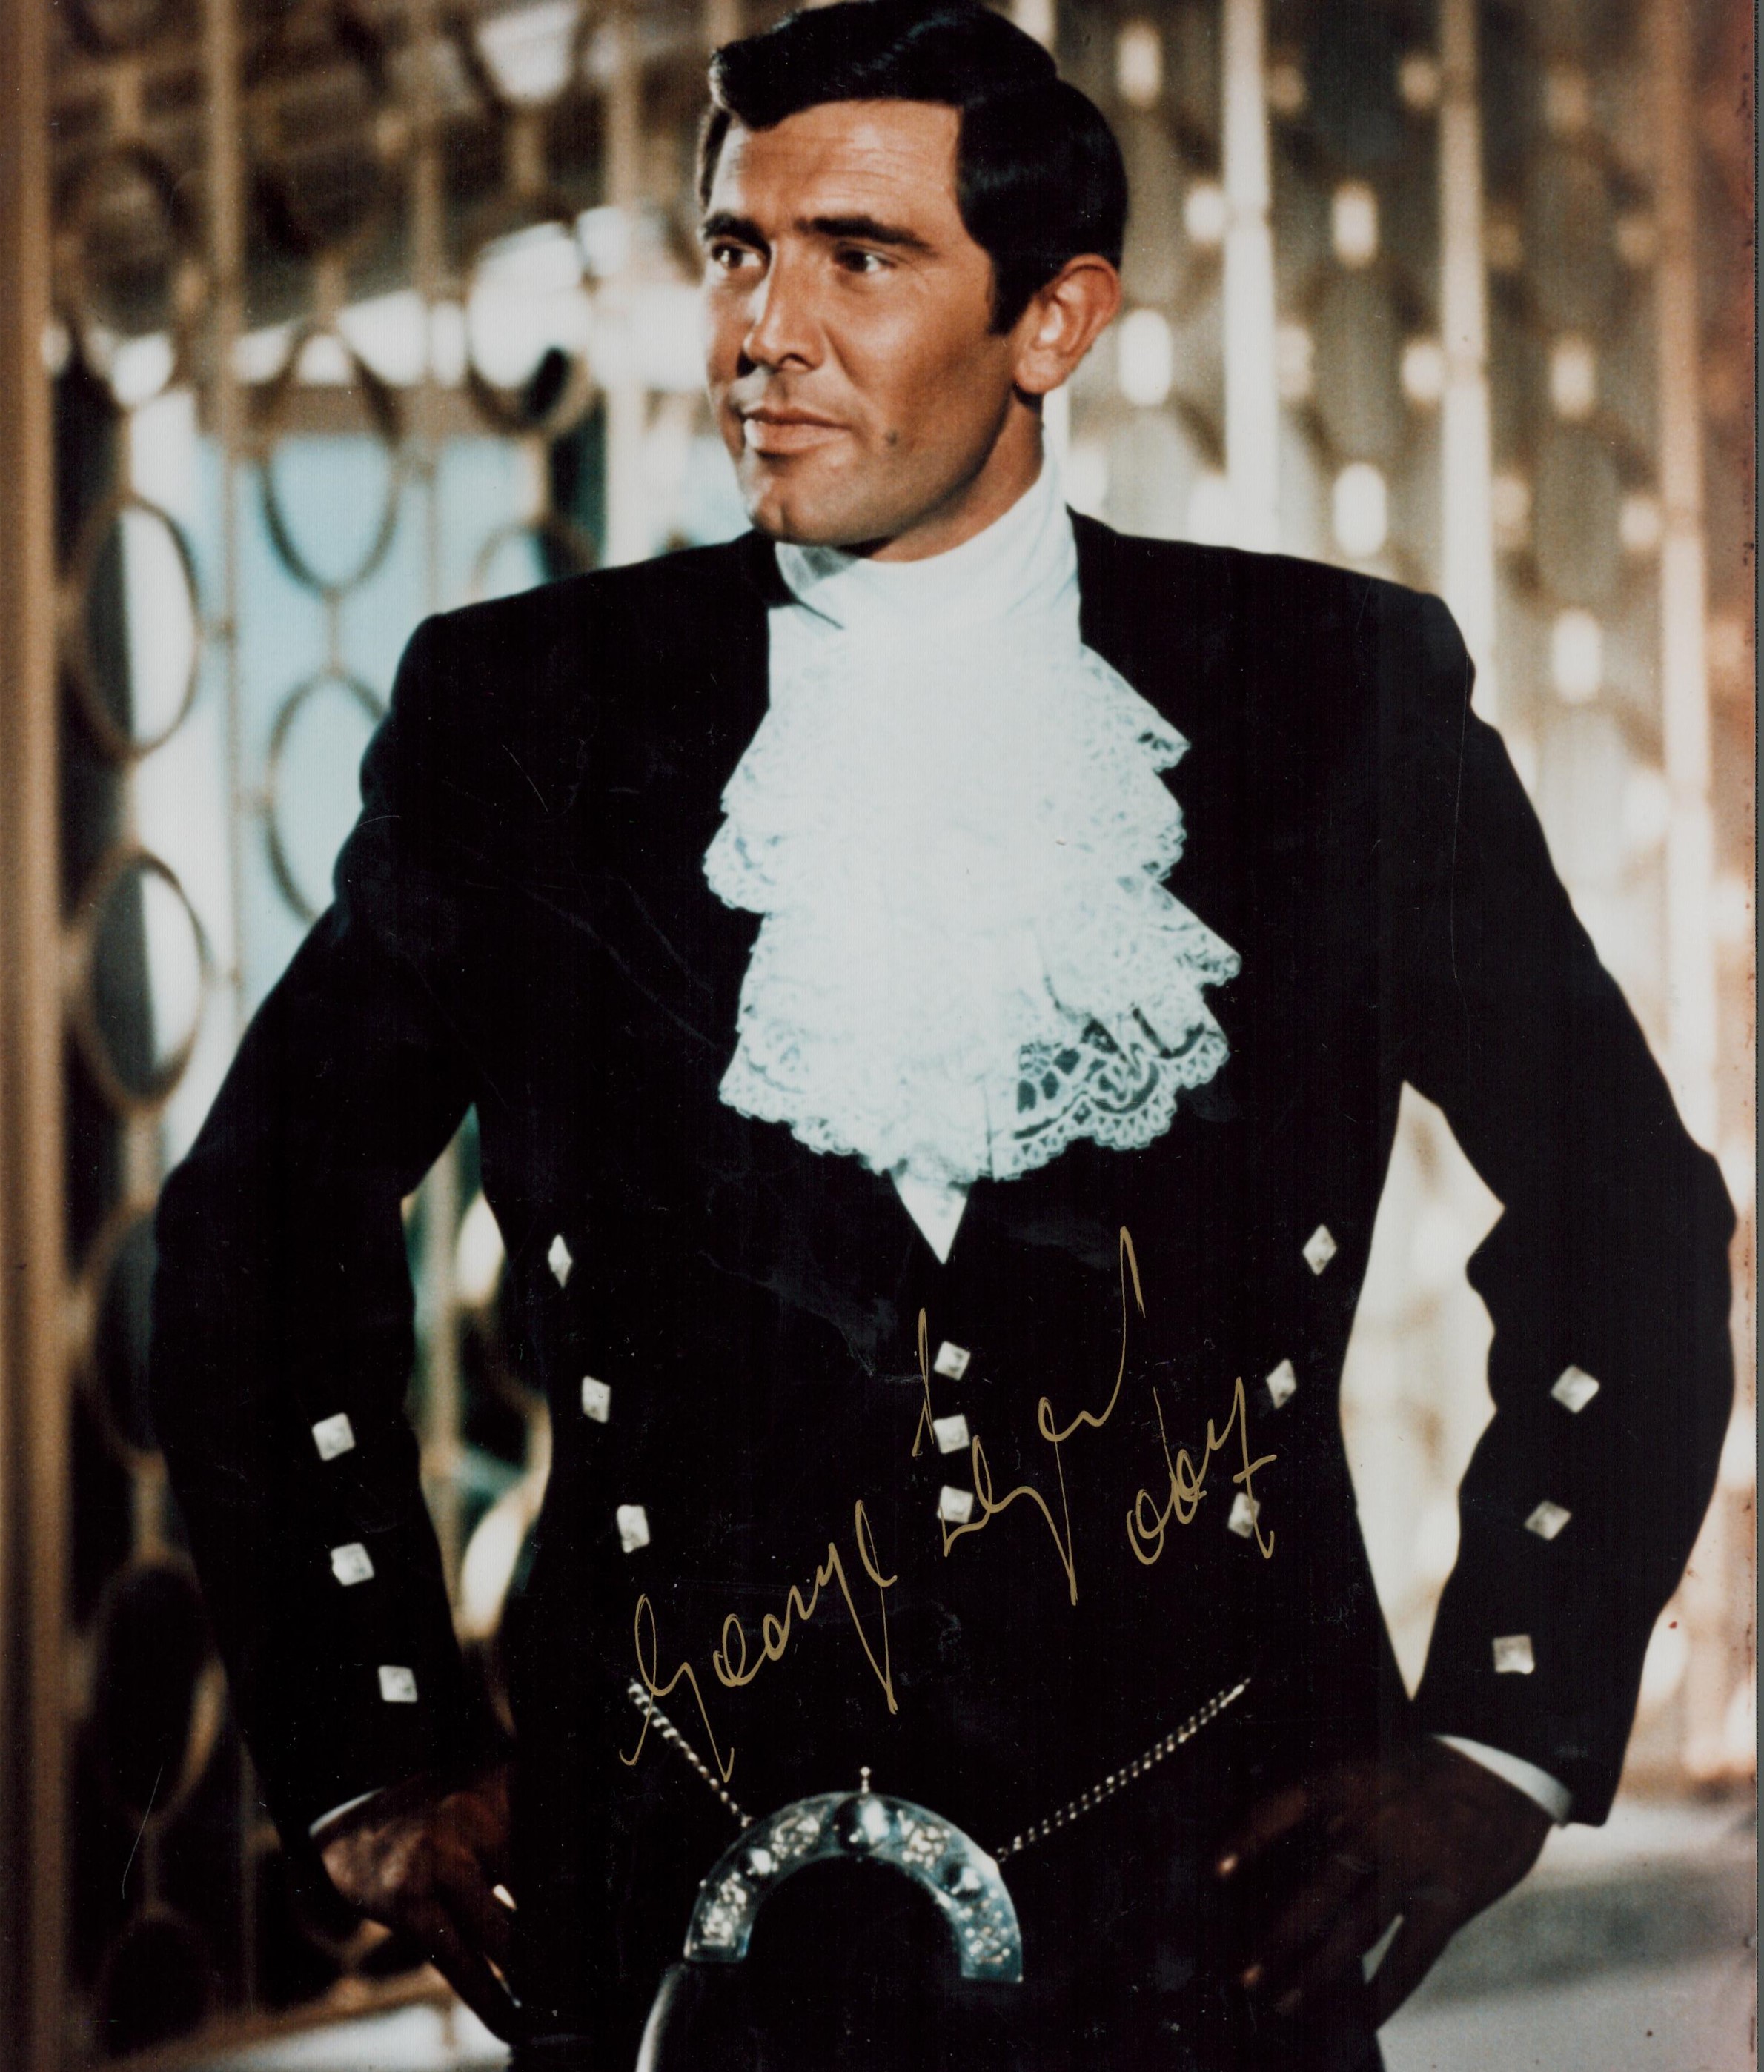 George Lazenby signed James Bond 10x8 colour photo. George Robert Lazenby (born 5 September 1939) is